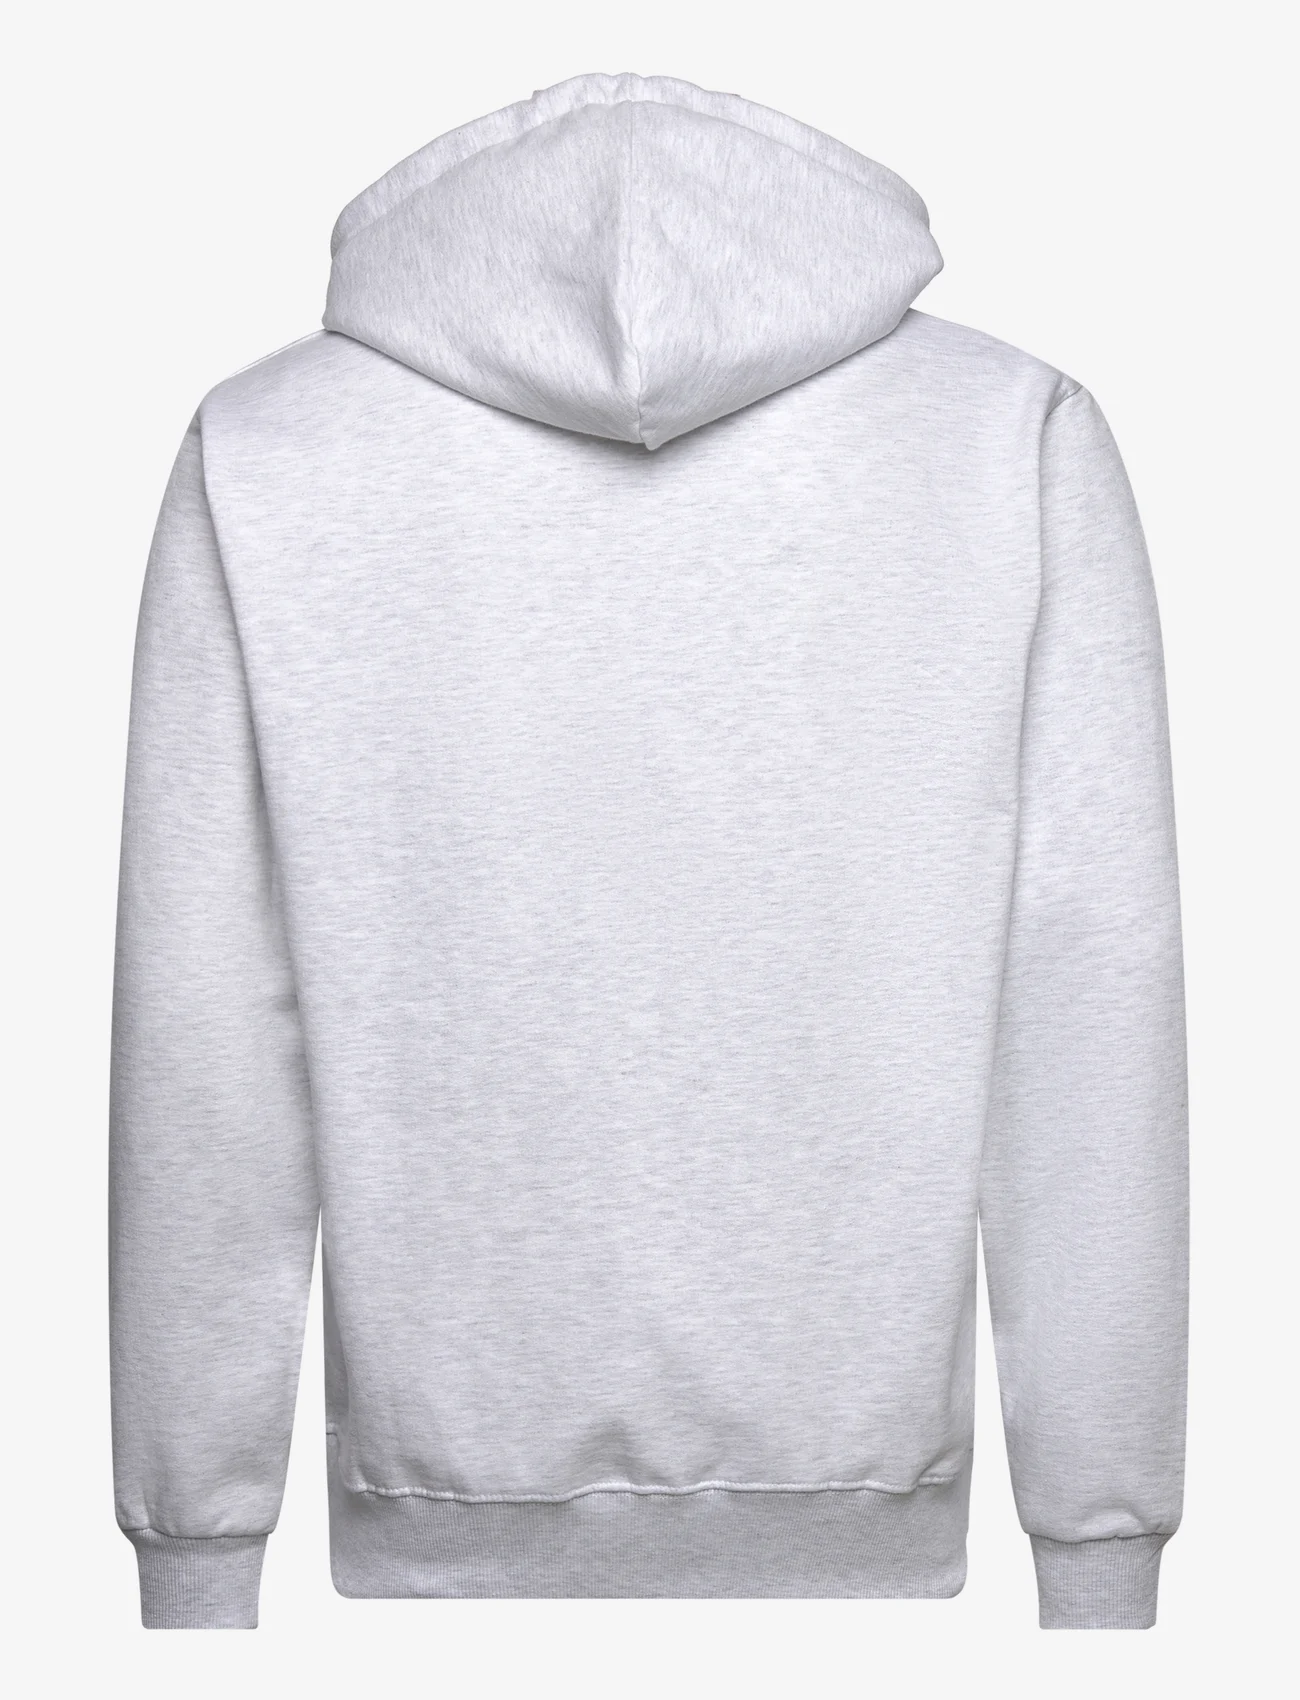 S.T. VALENTIN - Heavyweight Organic Logo Hoodie - Ash - hoodies - grey melange - 1